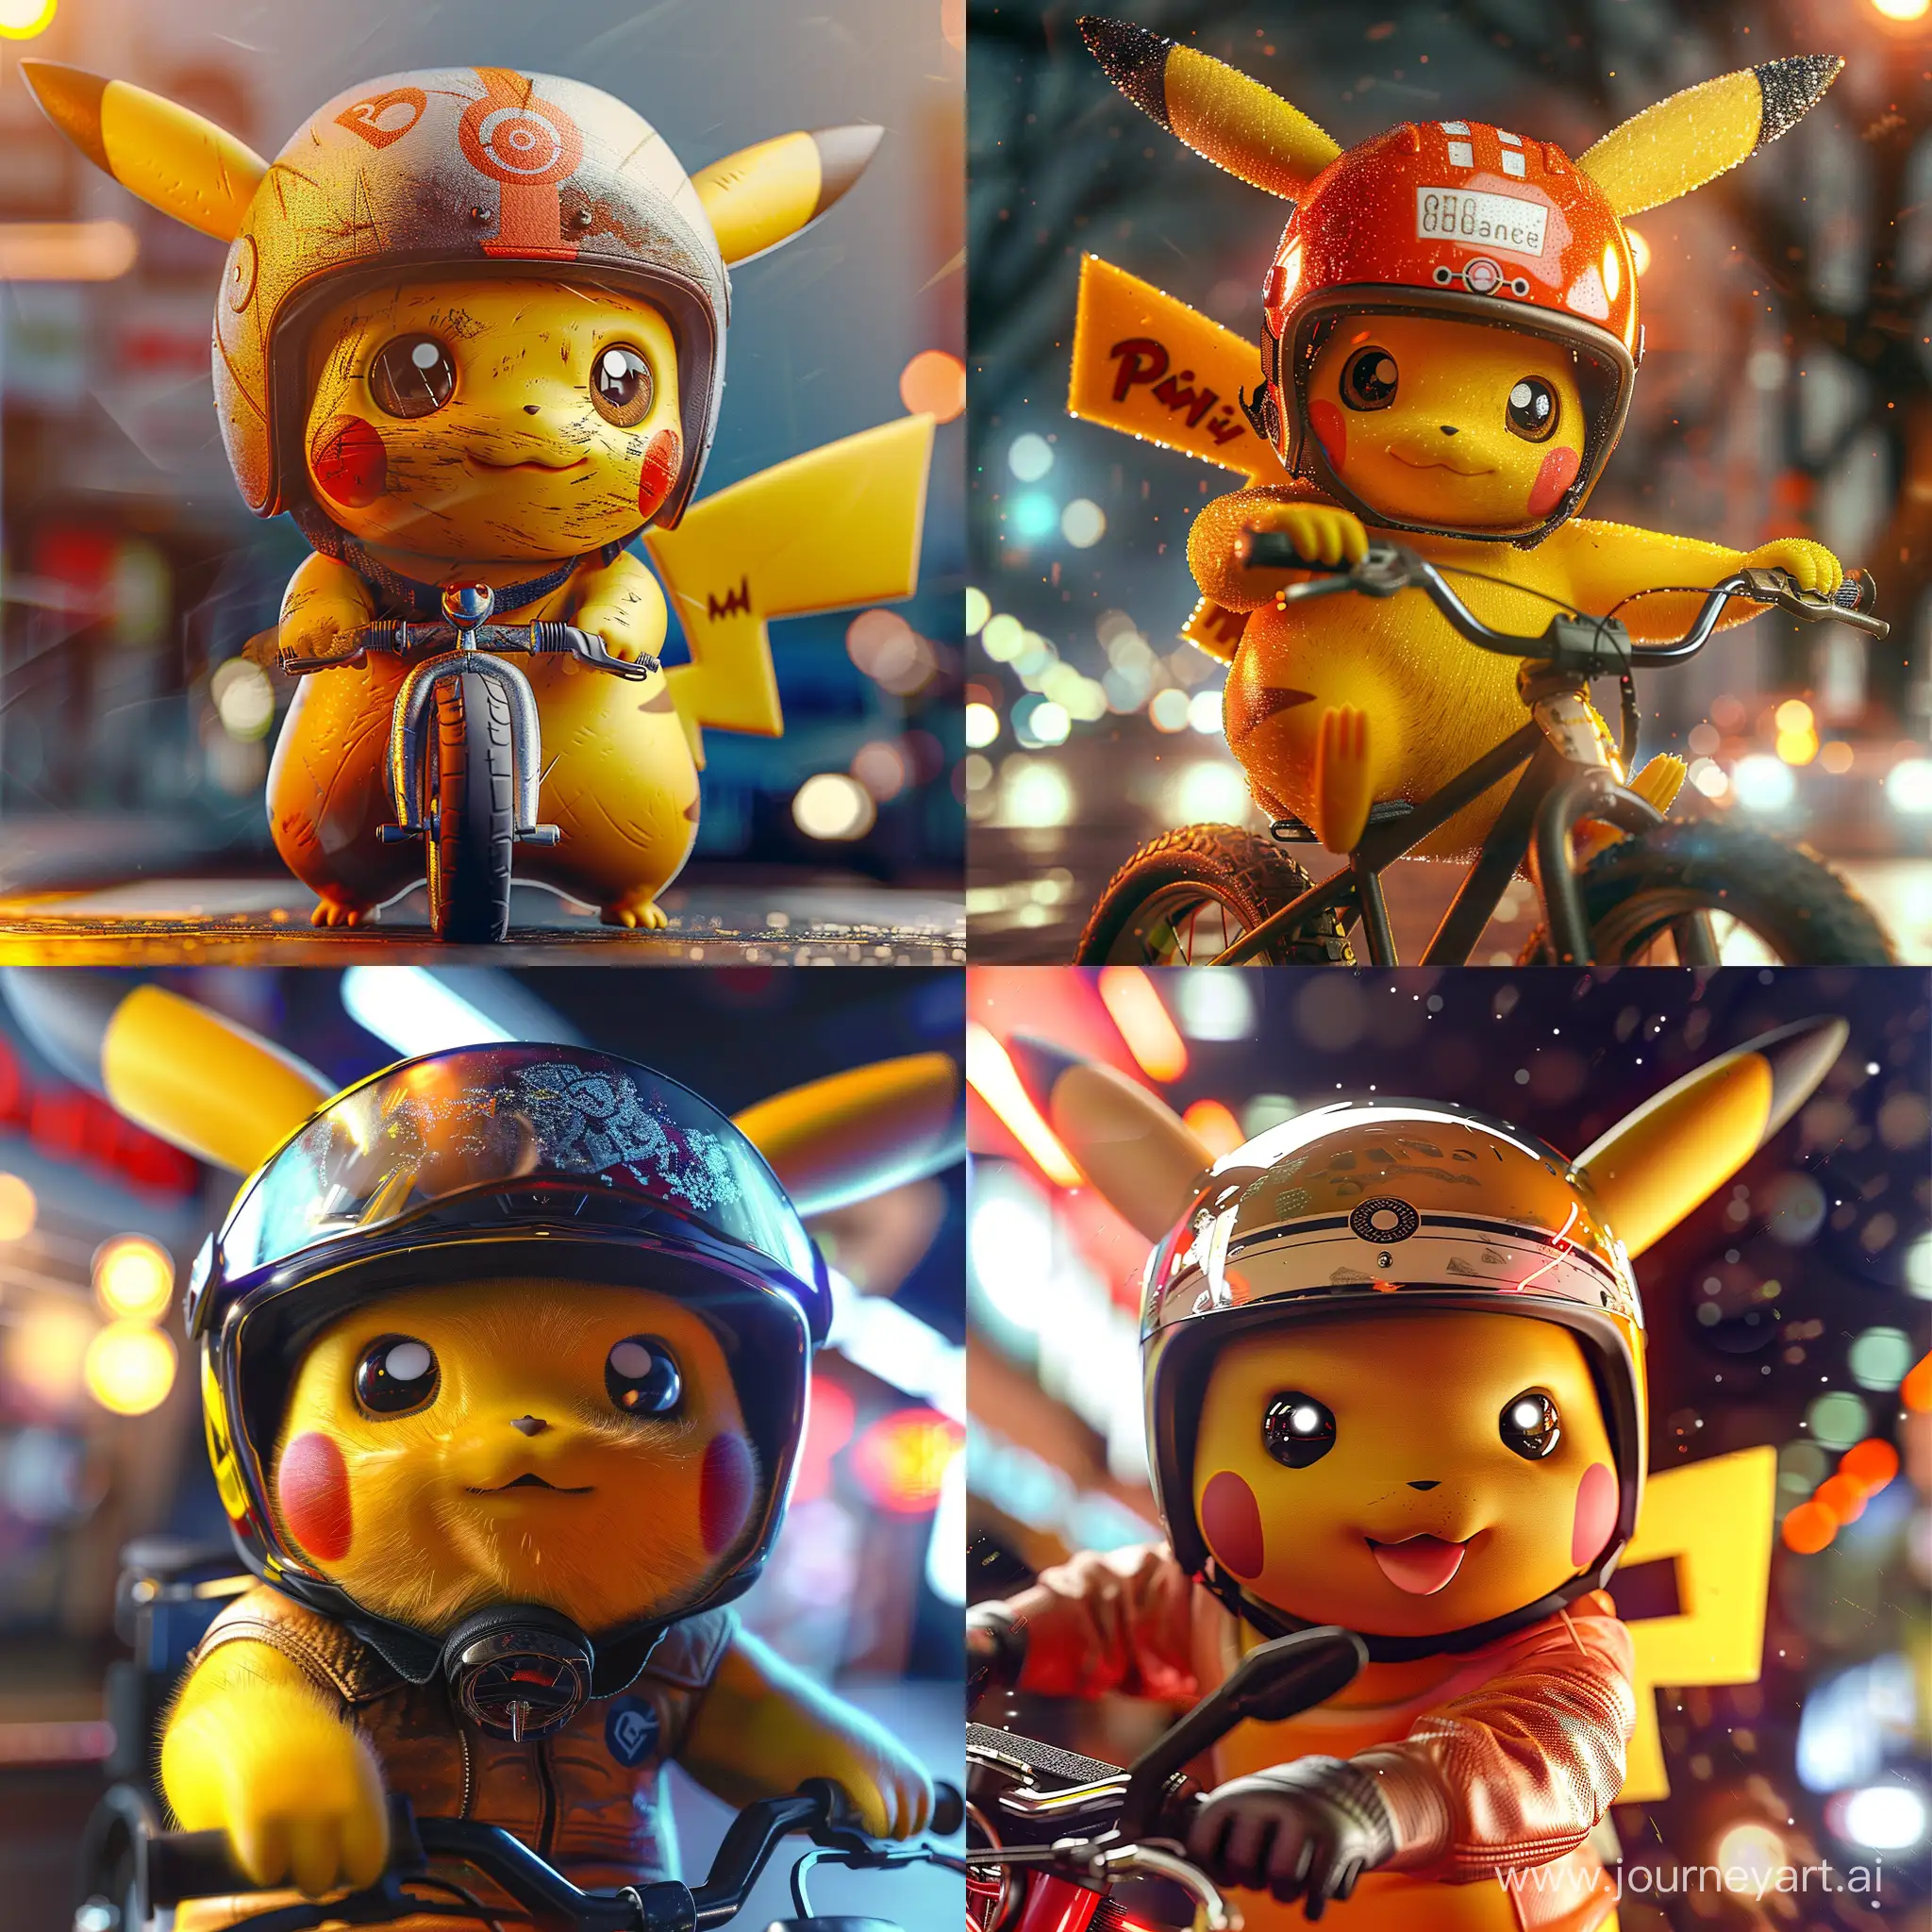 Pikachu-Biker-with-Crash-Helmet-Macro-Lens-Photorealistic-Image